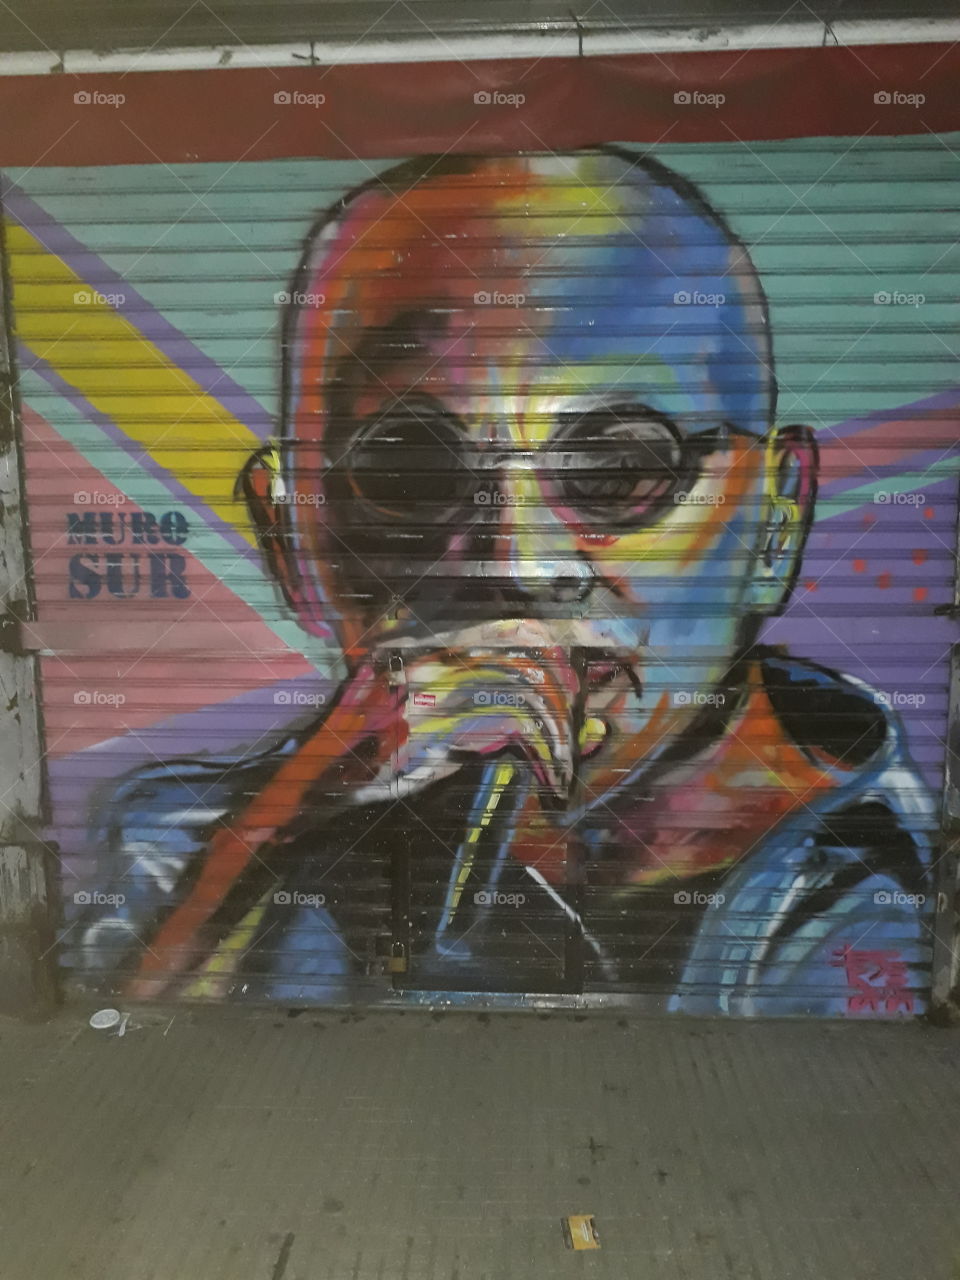 Rapper Graffiti